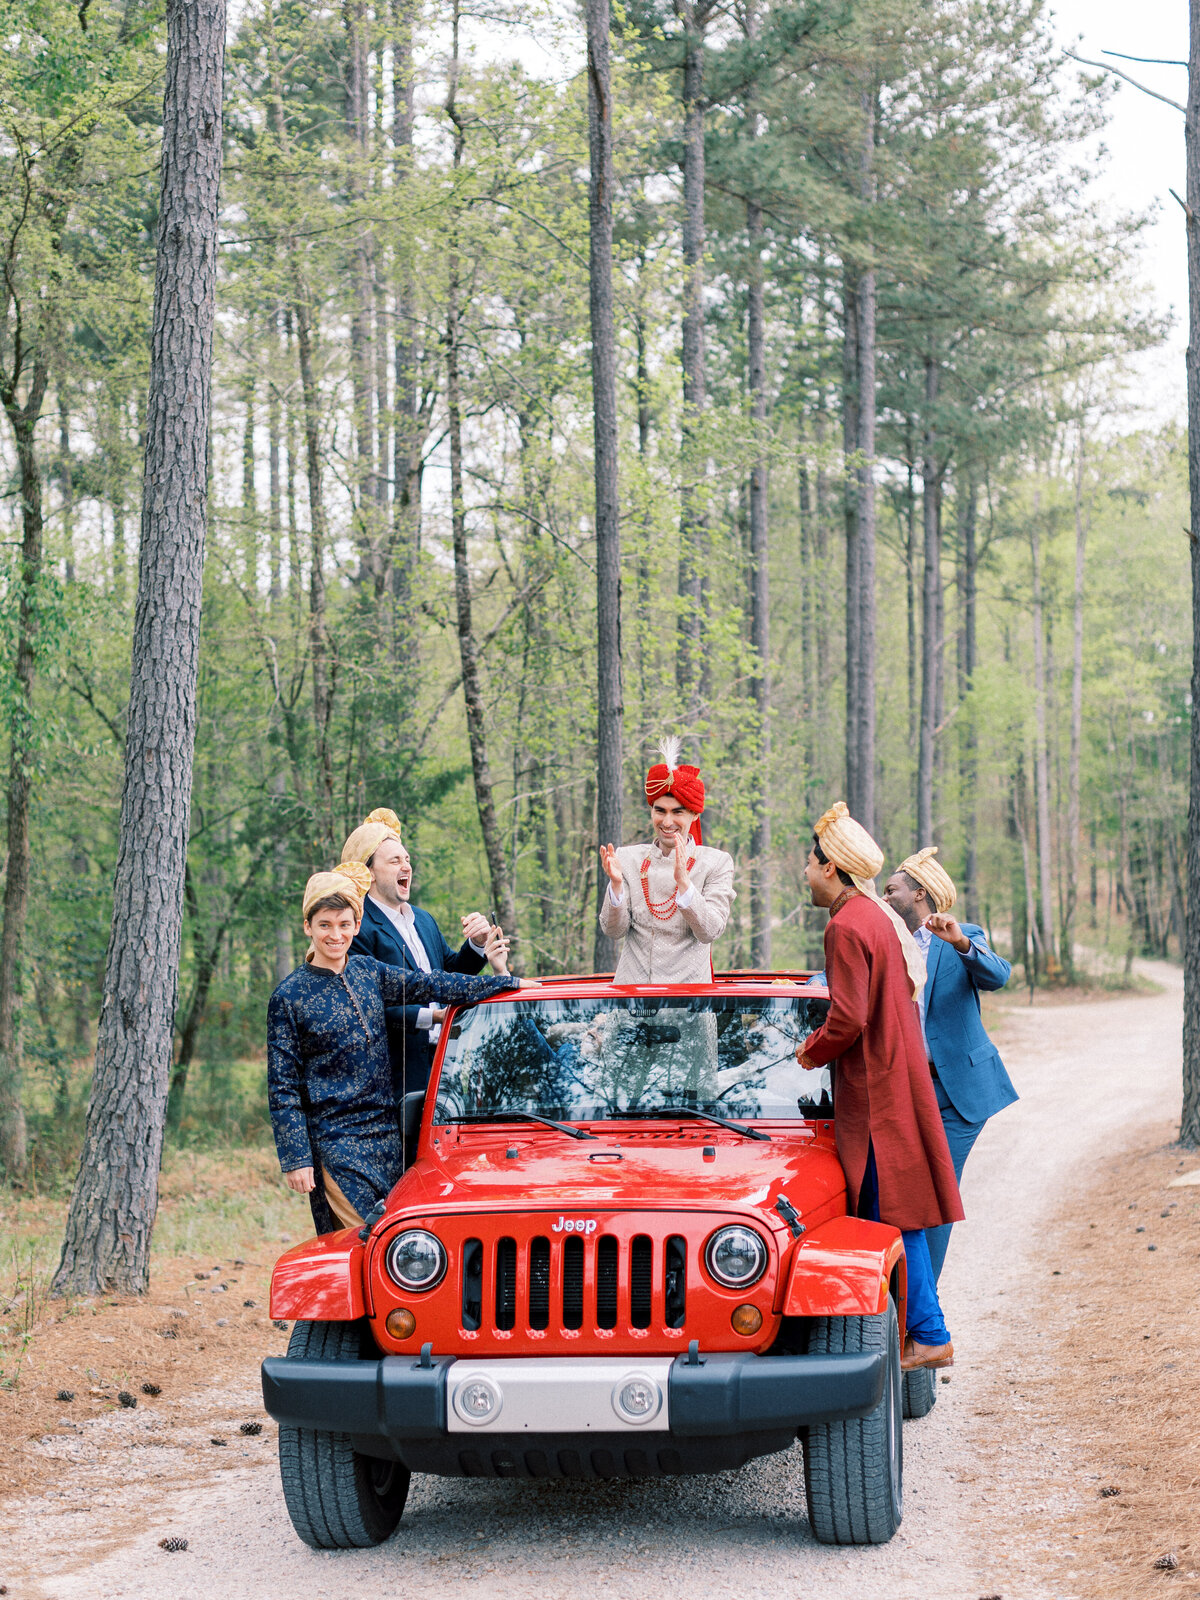 Prianka + Alex - Hindu Wedding 6 - Baraat - Groom entering in a Red jeep